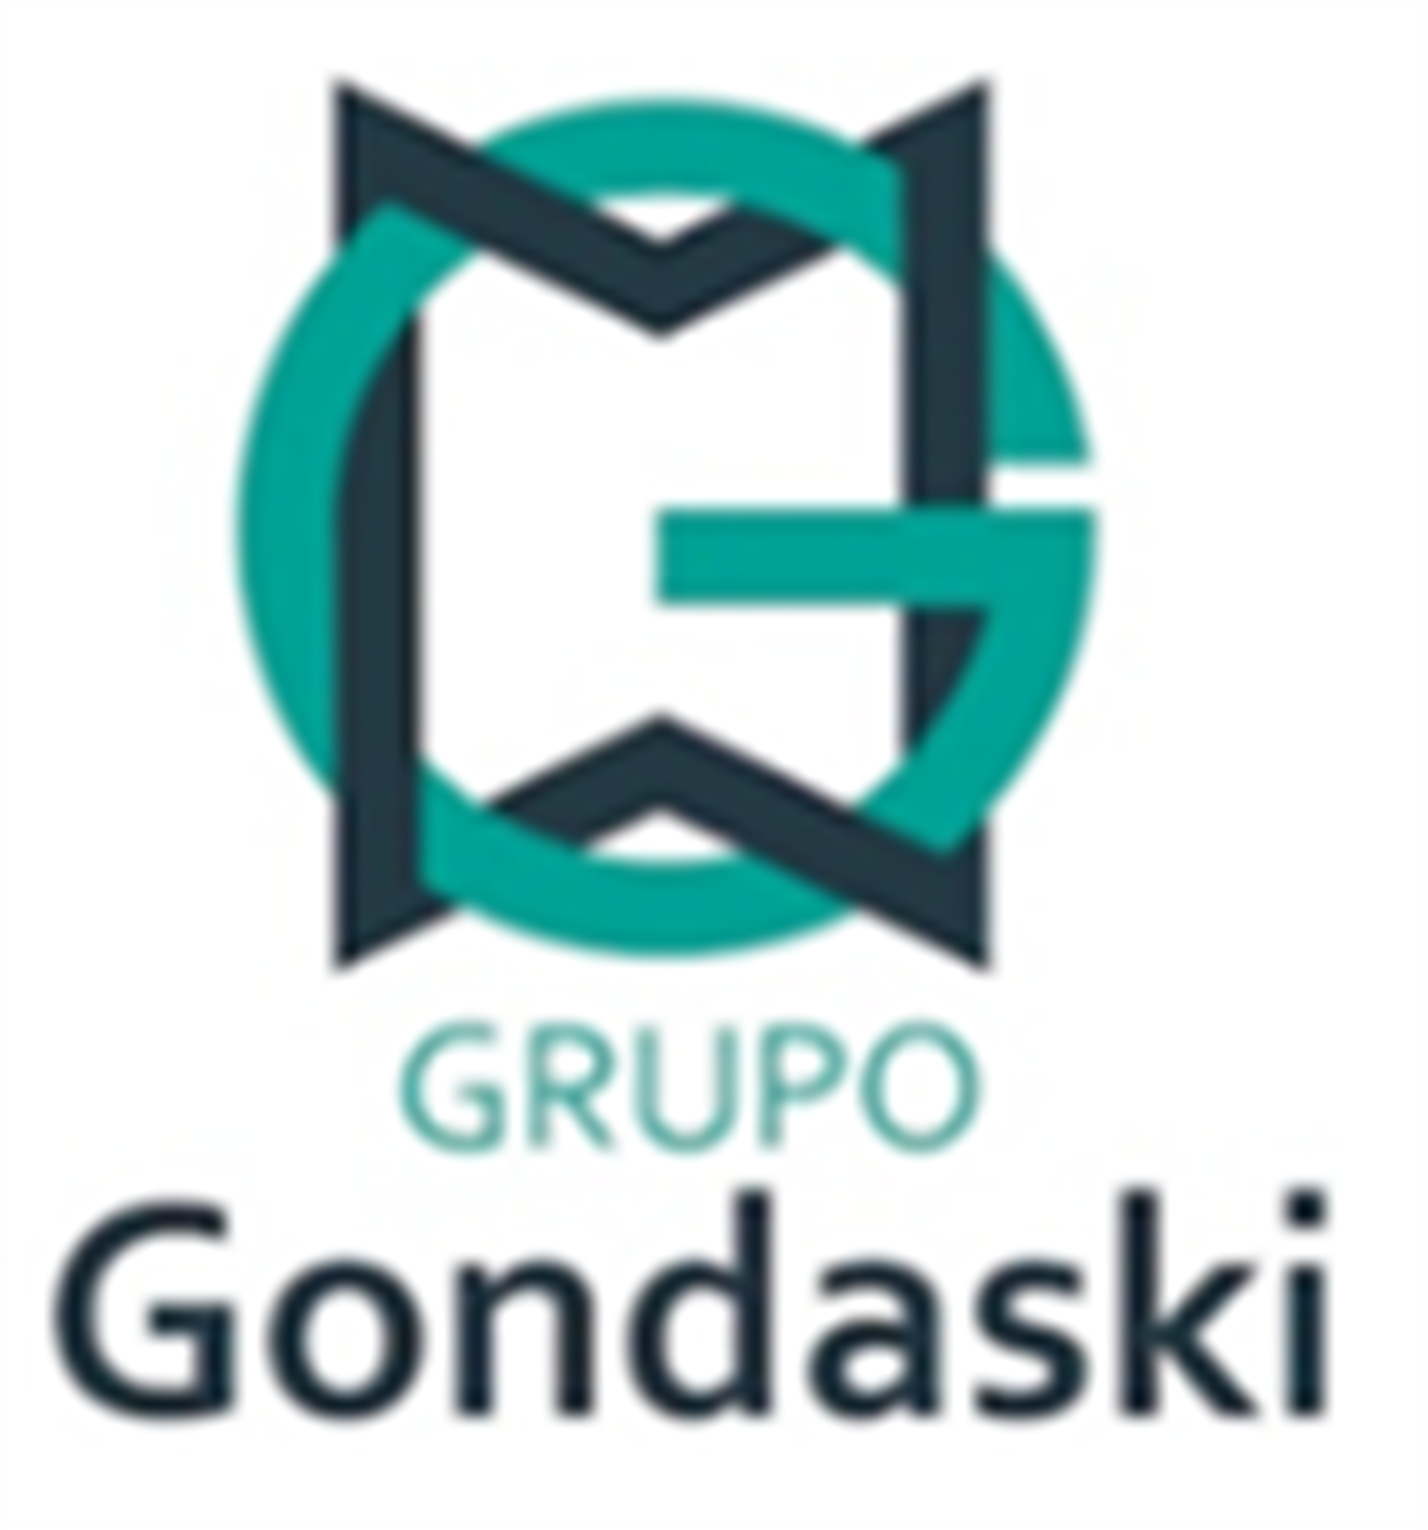 Grupo Gondaski